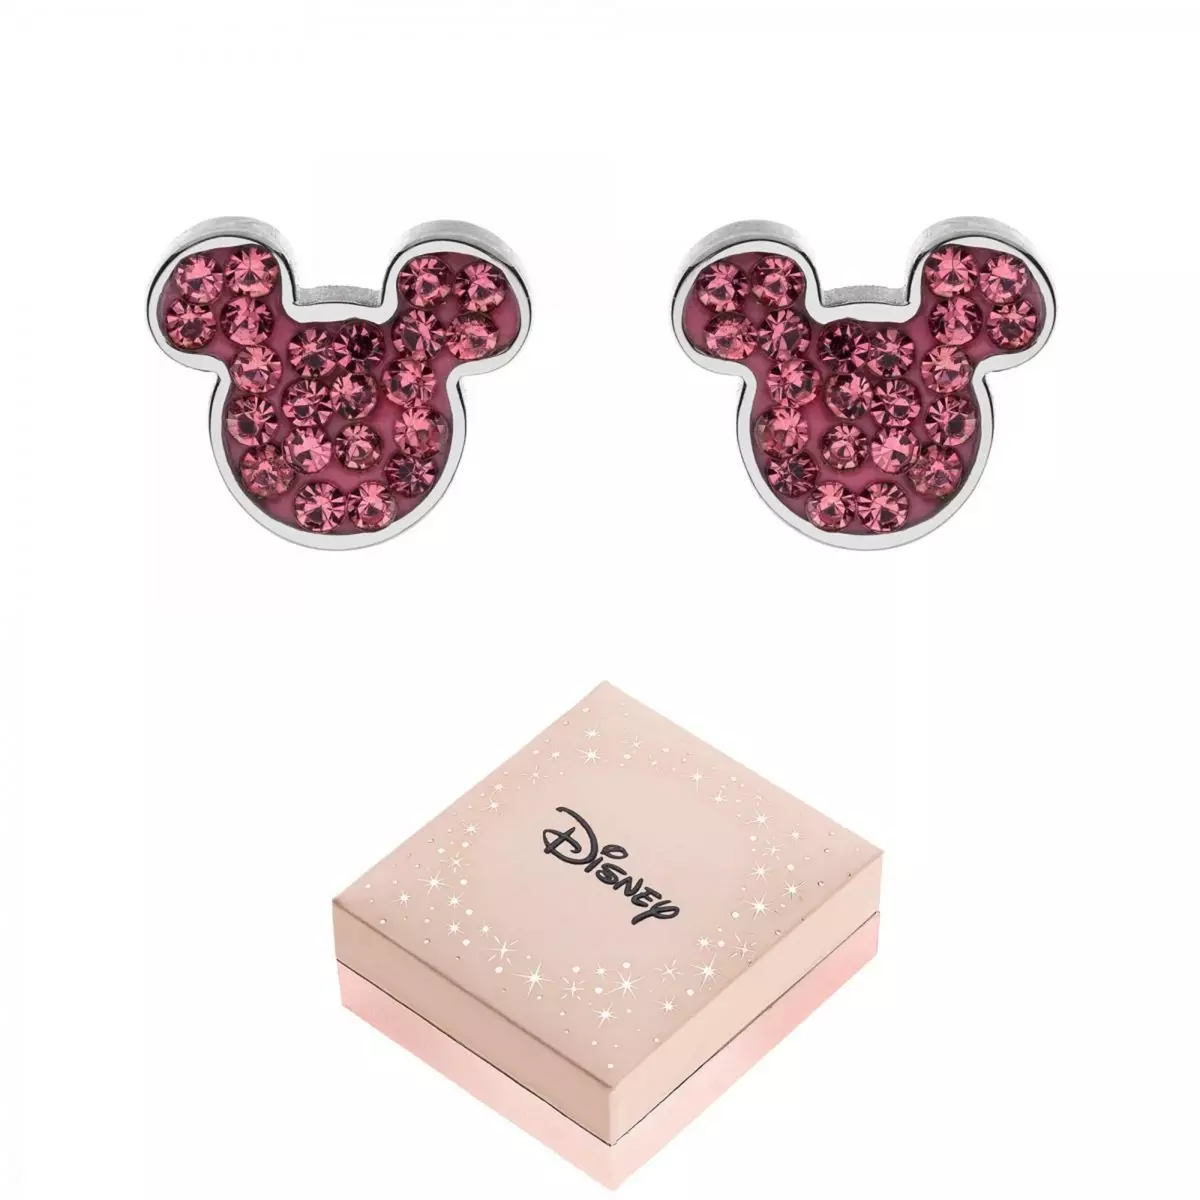 SC CRYSTAL Boucles d'oreilles Disney ornées de Cristaux scintillants - Mickey